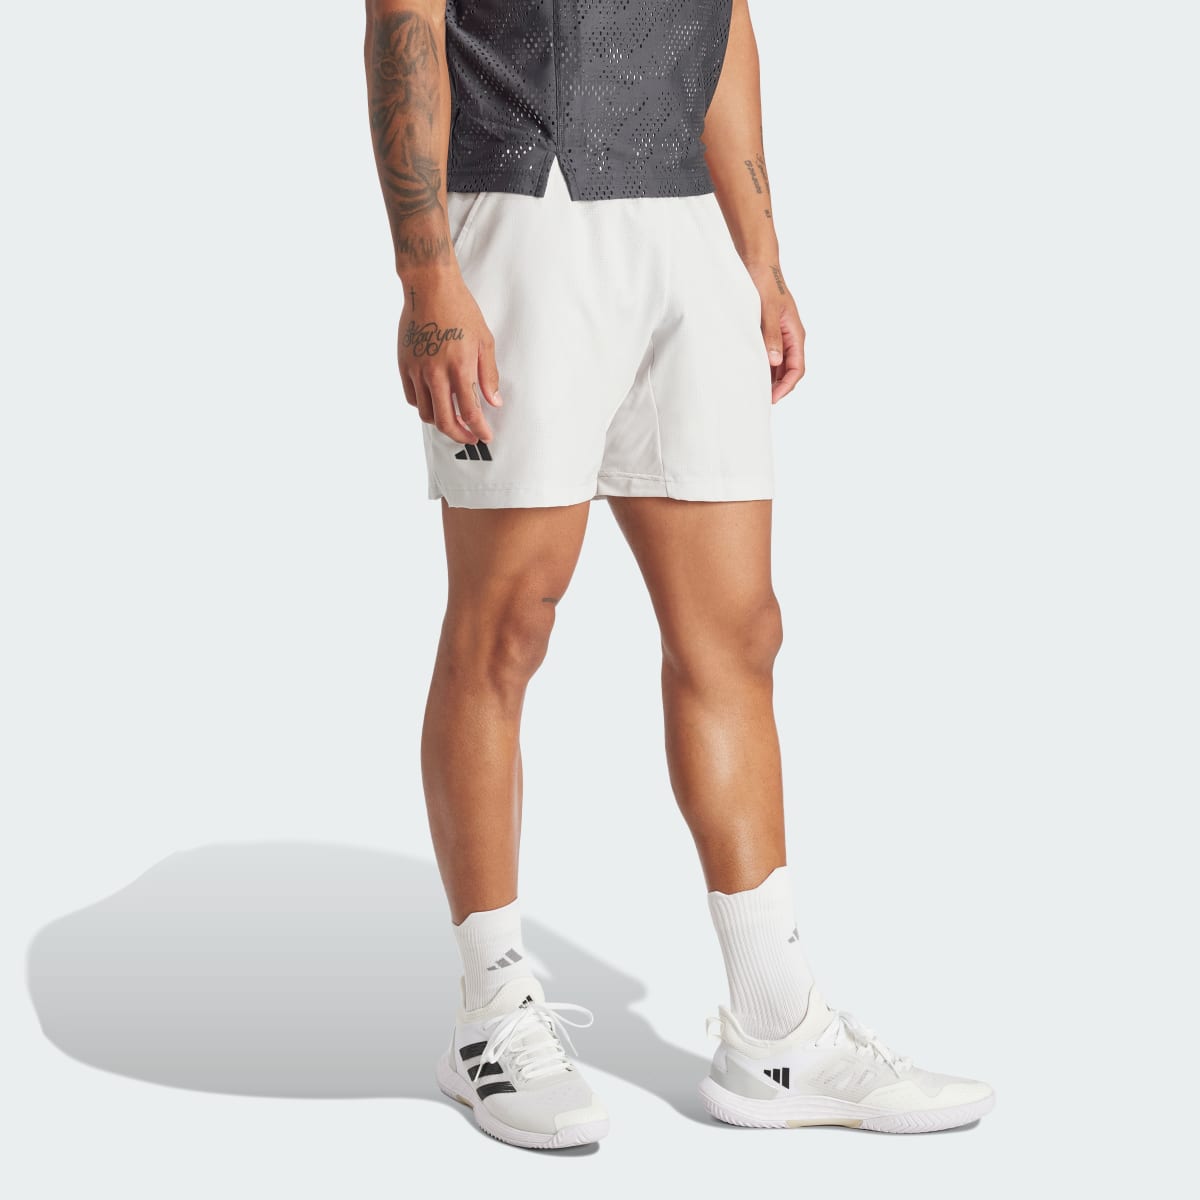 Adidas Tennis HEAT.RDY Shorts and Inner Shorts Set. 4